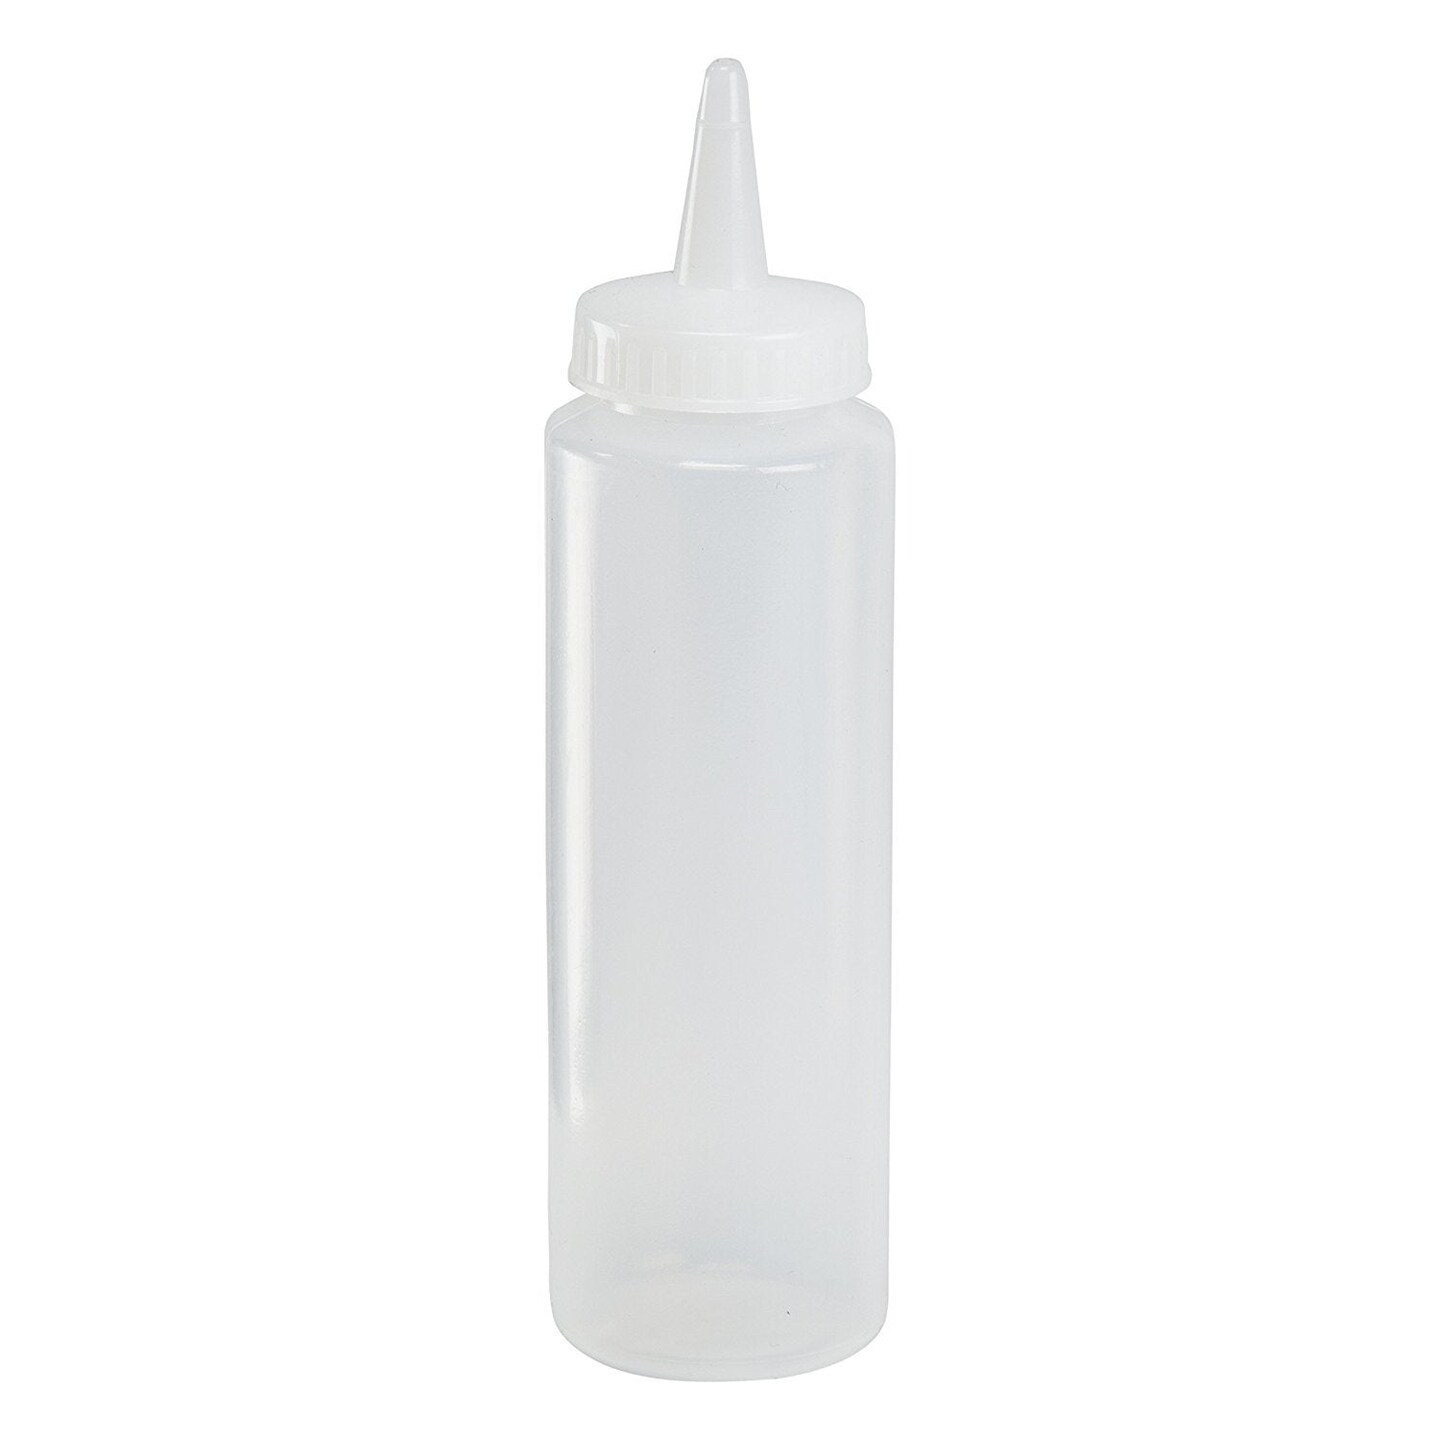 nicebottles Clear Glass Beverage/Sauce Bottles, 12 Oz, White Caps - Case of  12